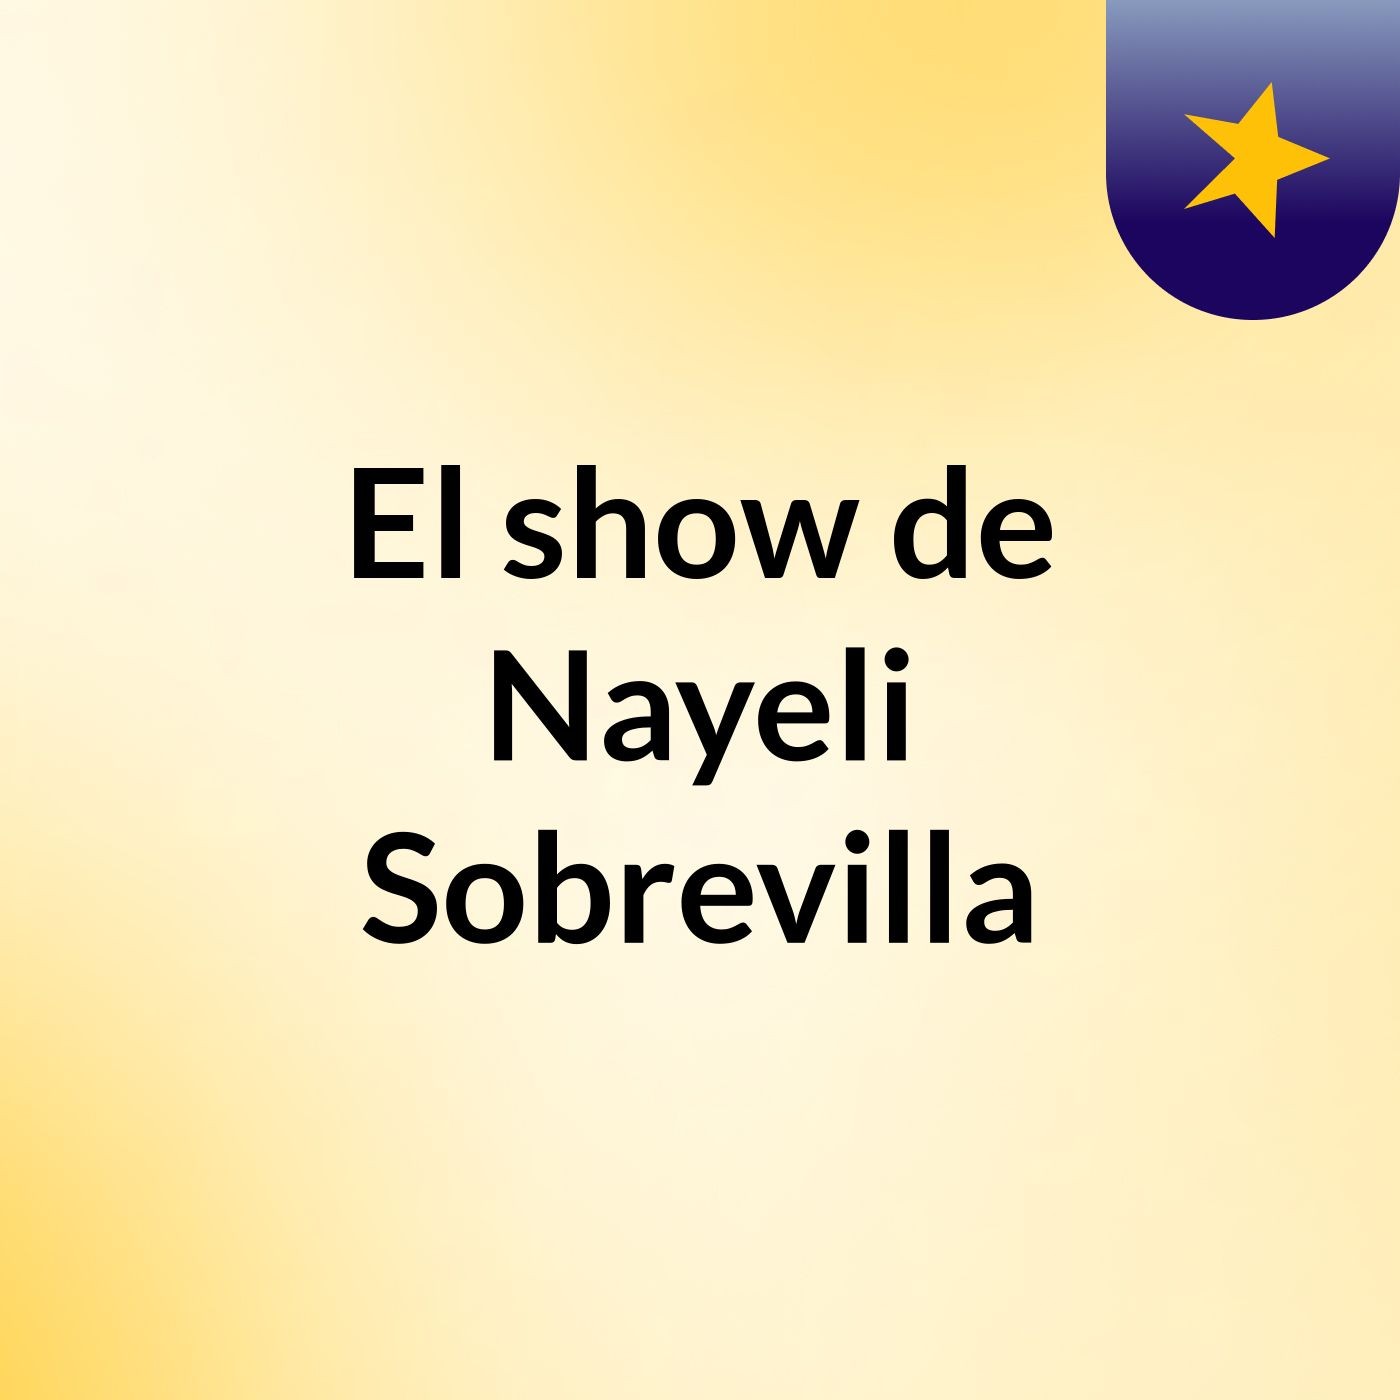 El show de Nayeli Sobrevilla